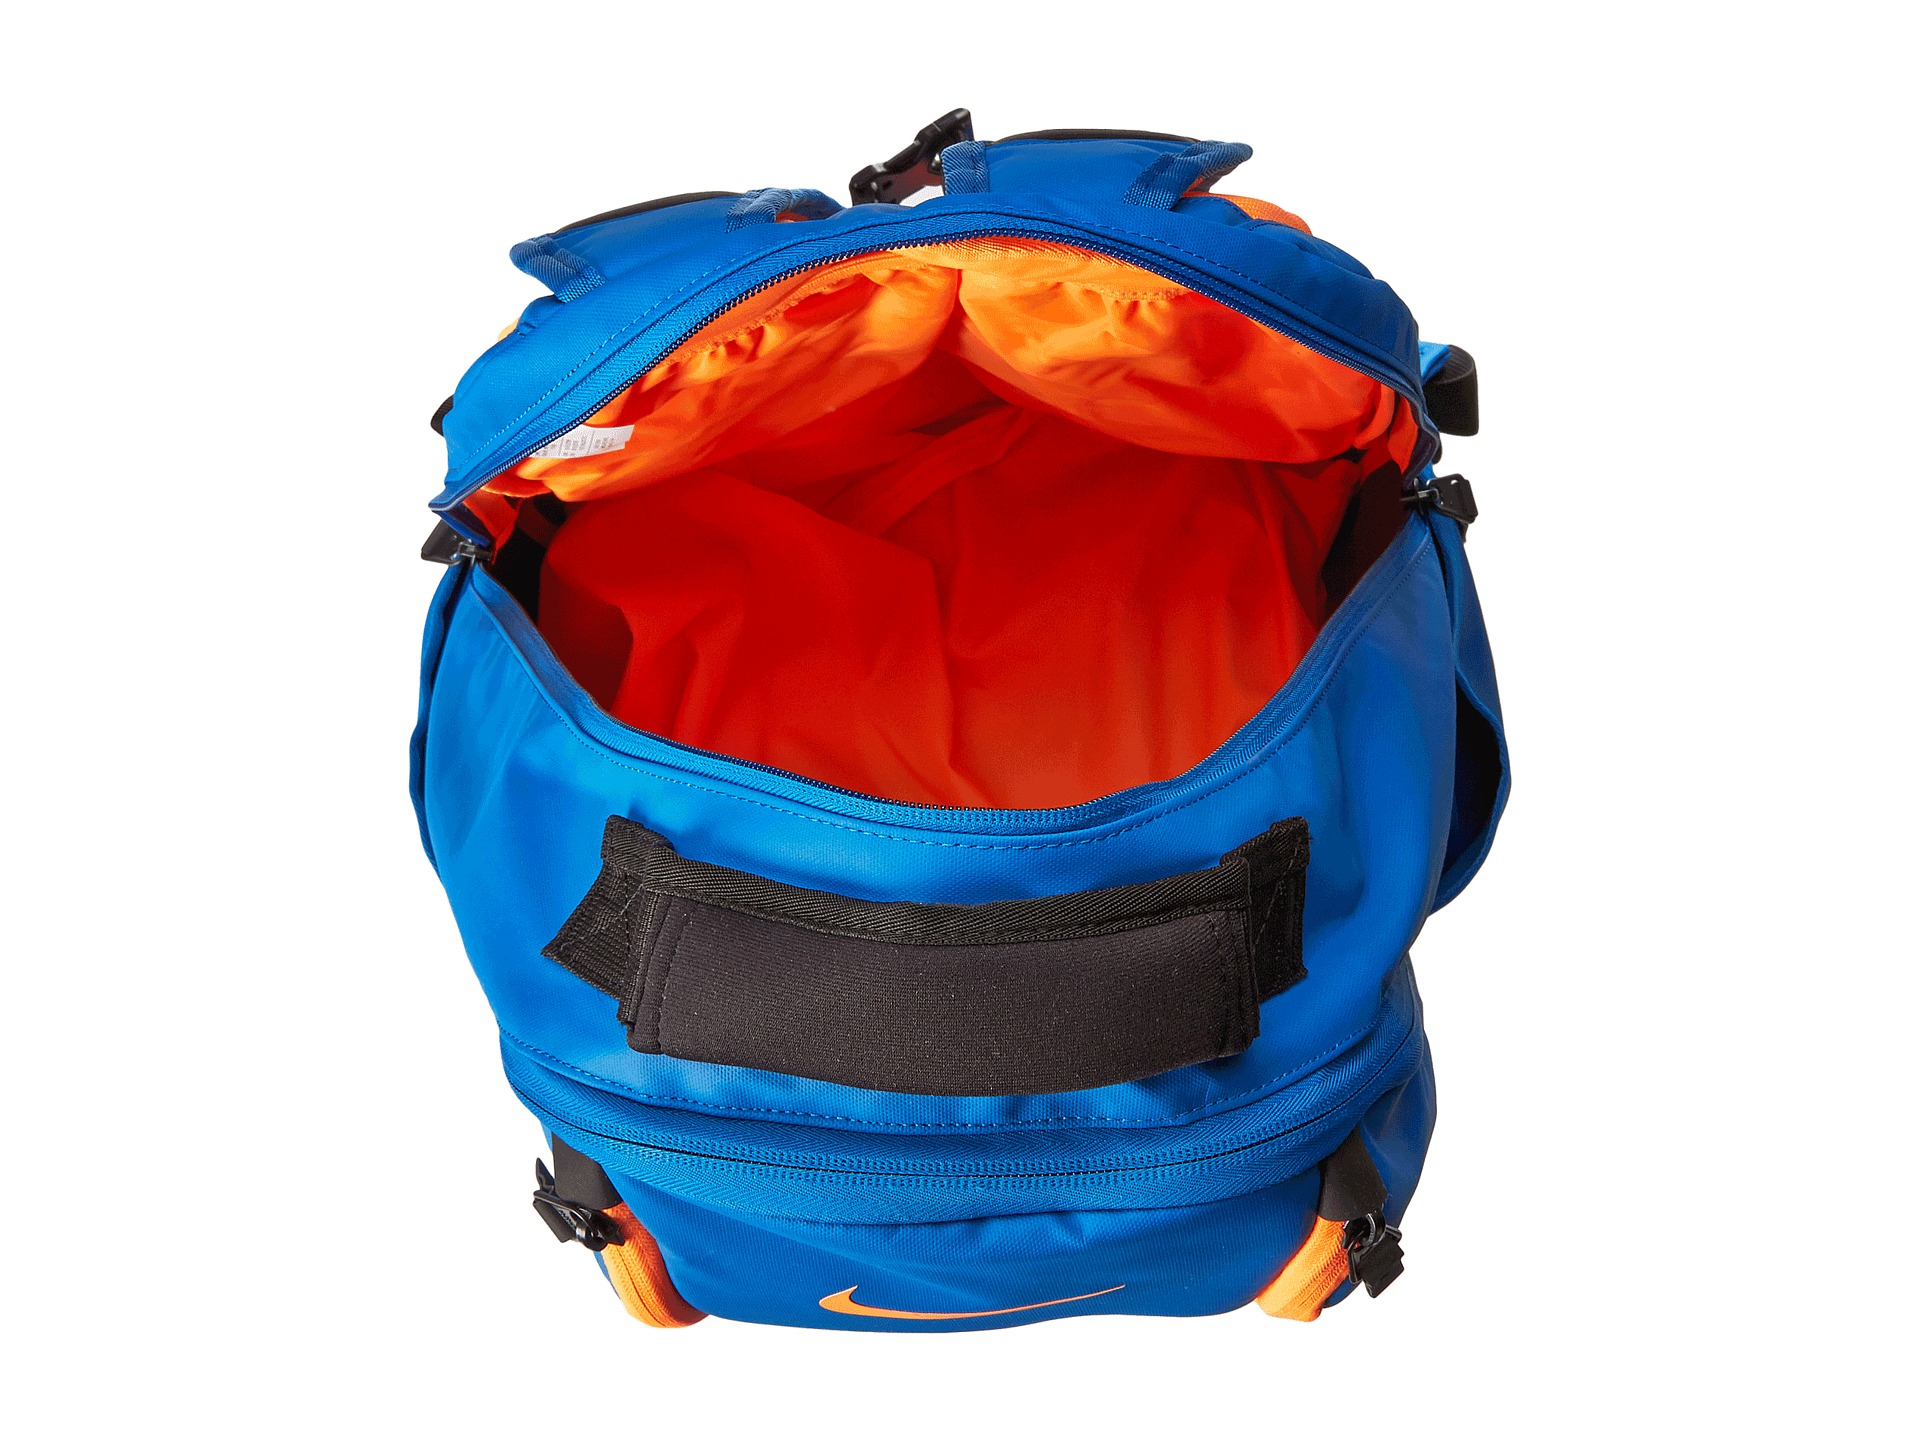 Nike Ultimatum Max Air Gear Backpack in Blue - Lyst